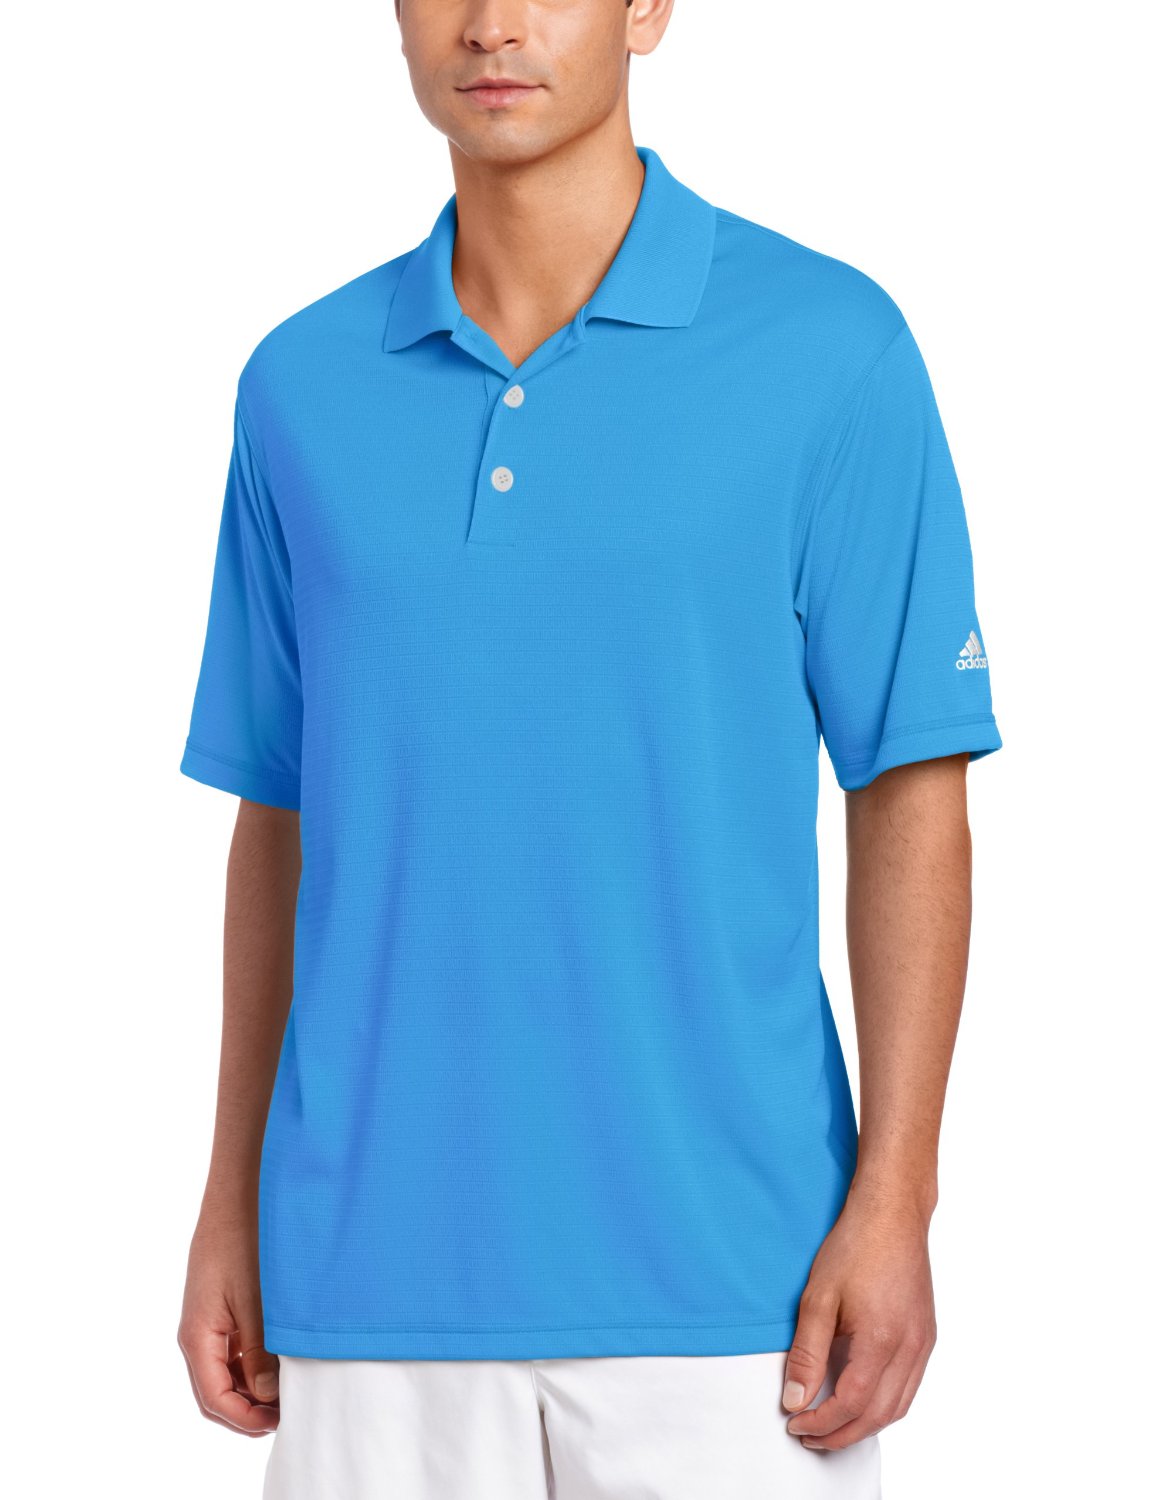 Adidas Climalite Solid Golf Polo Shirts